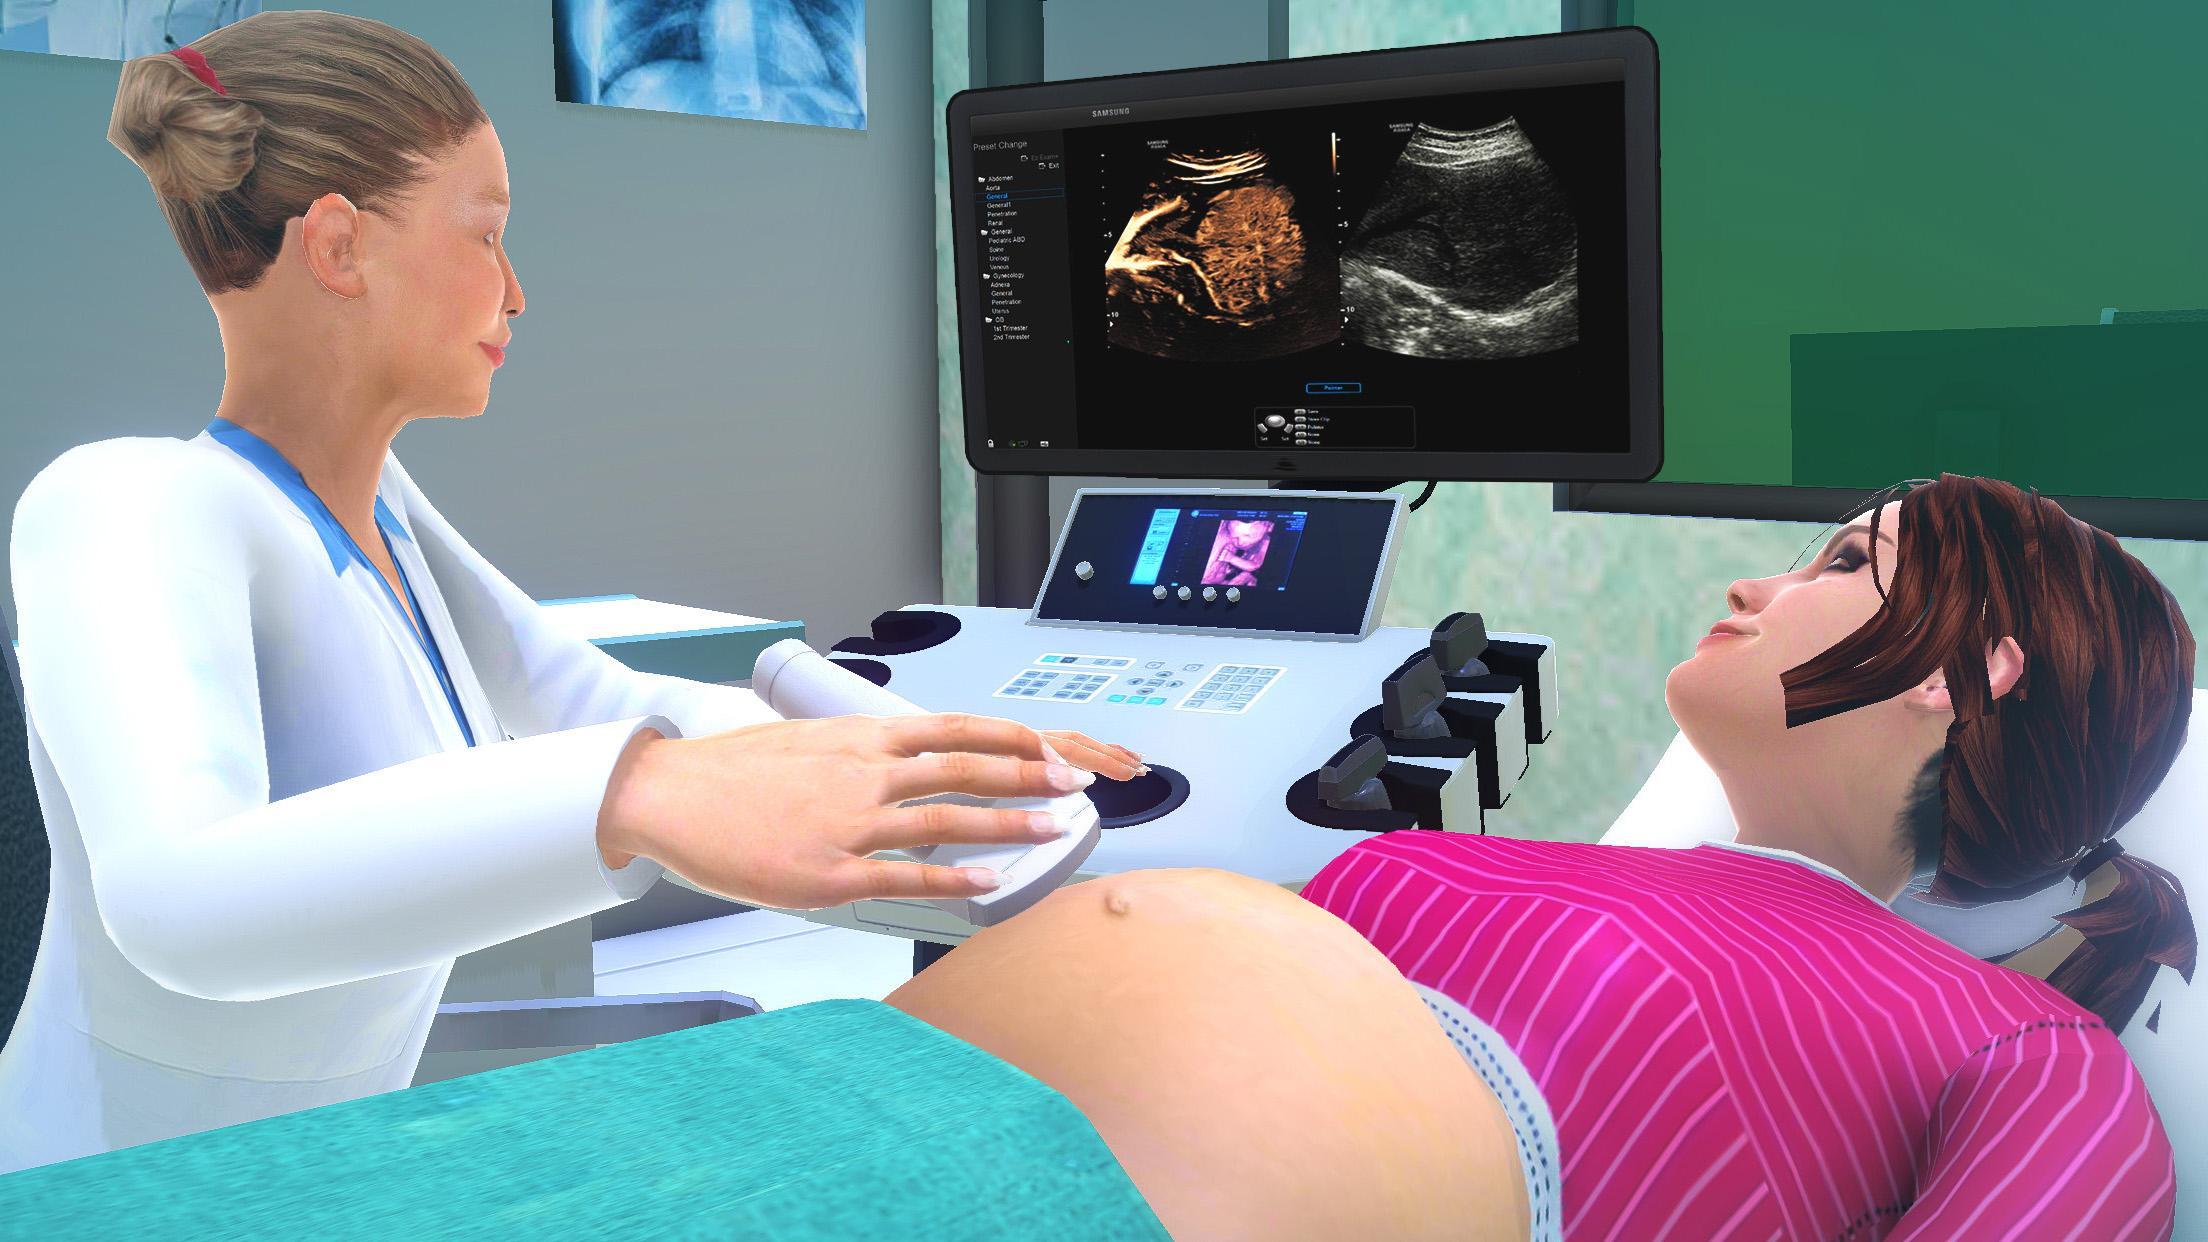 3d virtual world where you can get pregnant